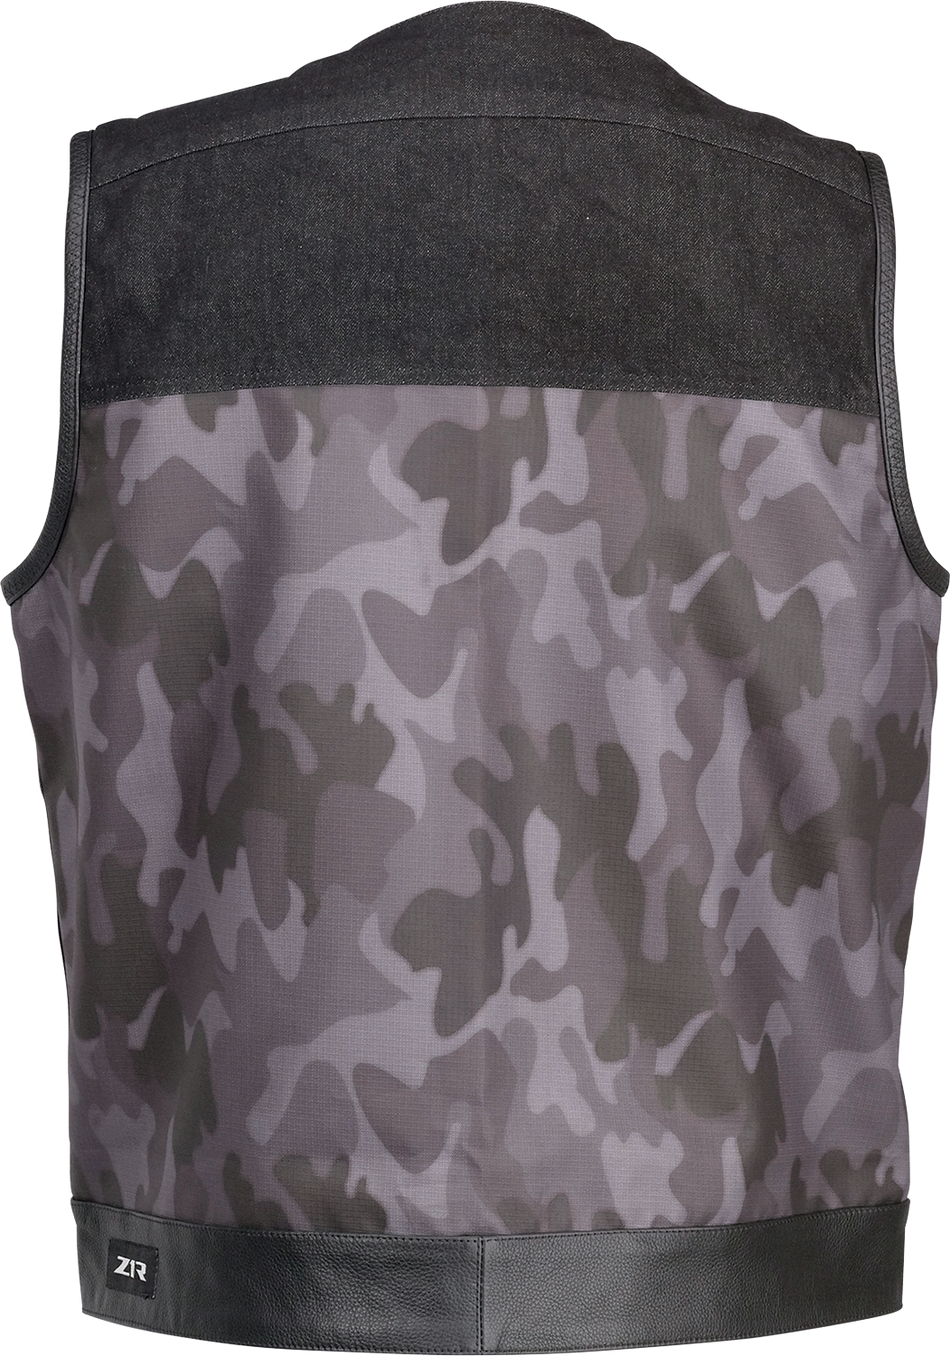 Z1R Nightfire Camo Vest - Black/Gray - Large 2830-0626